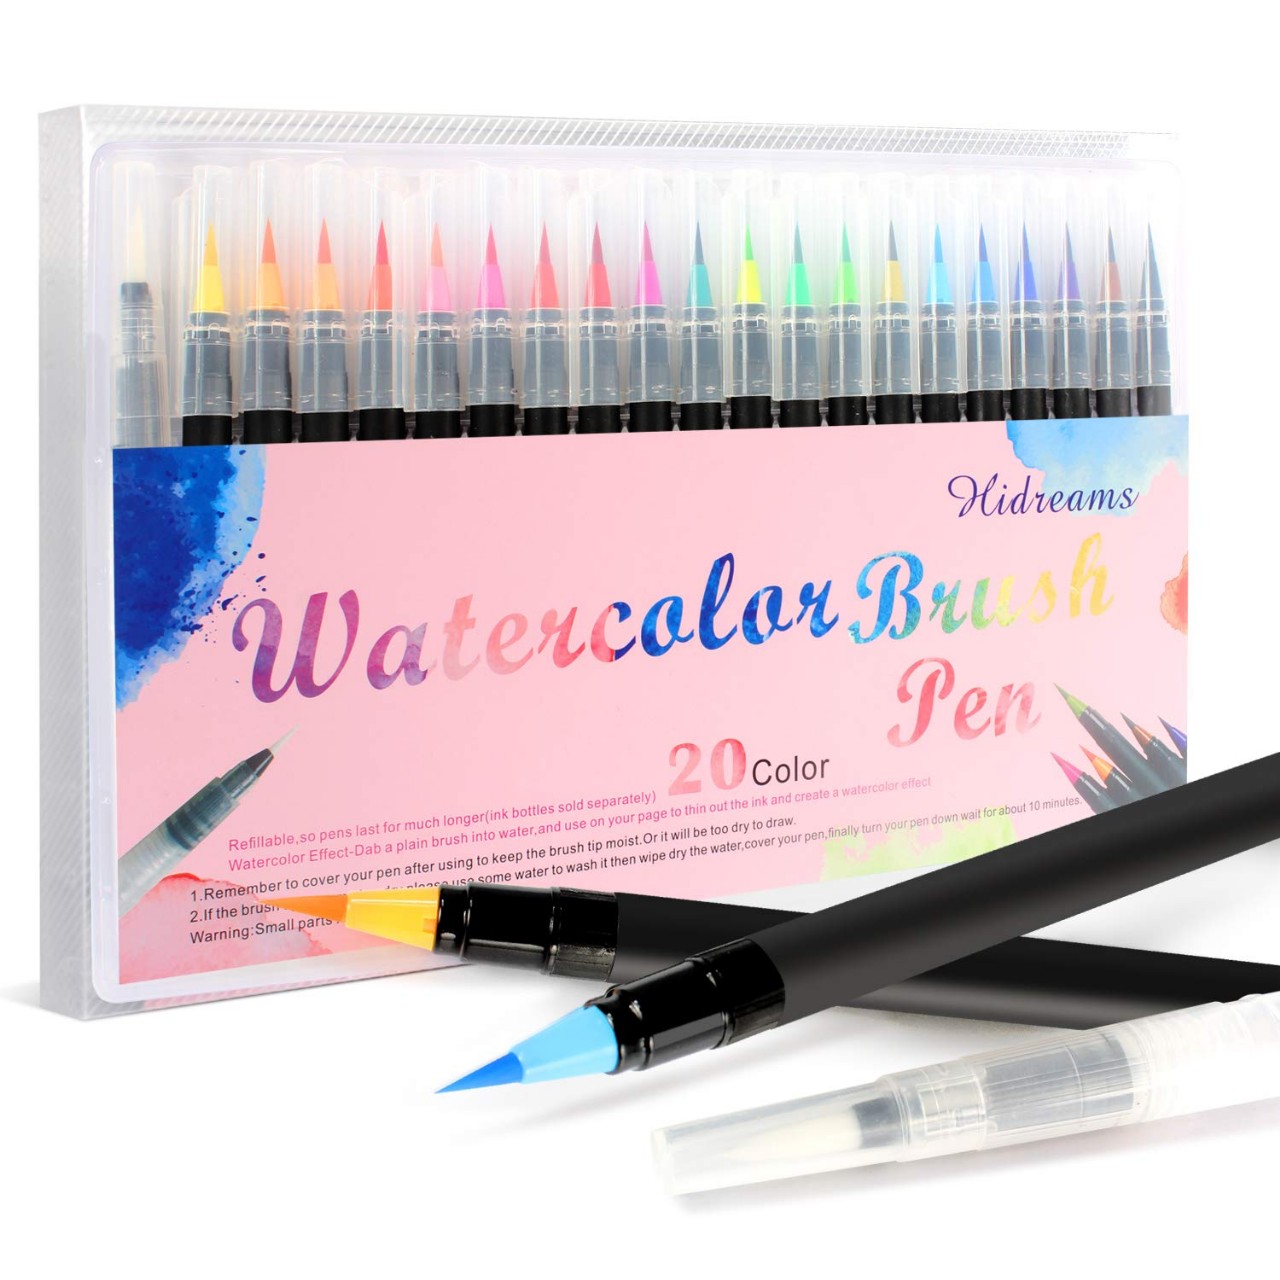 20 Colors Watercolor Markers Brush Pen Set,Watercolor Brush Pens with Soft Flexible Tip, Water Solub